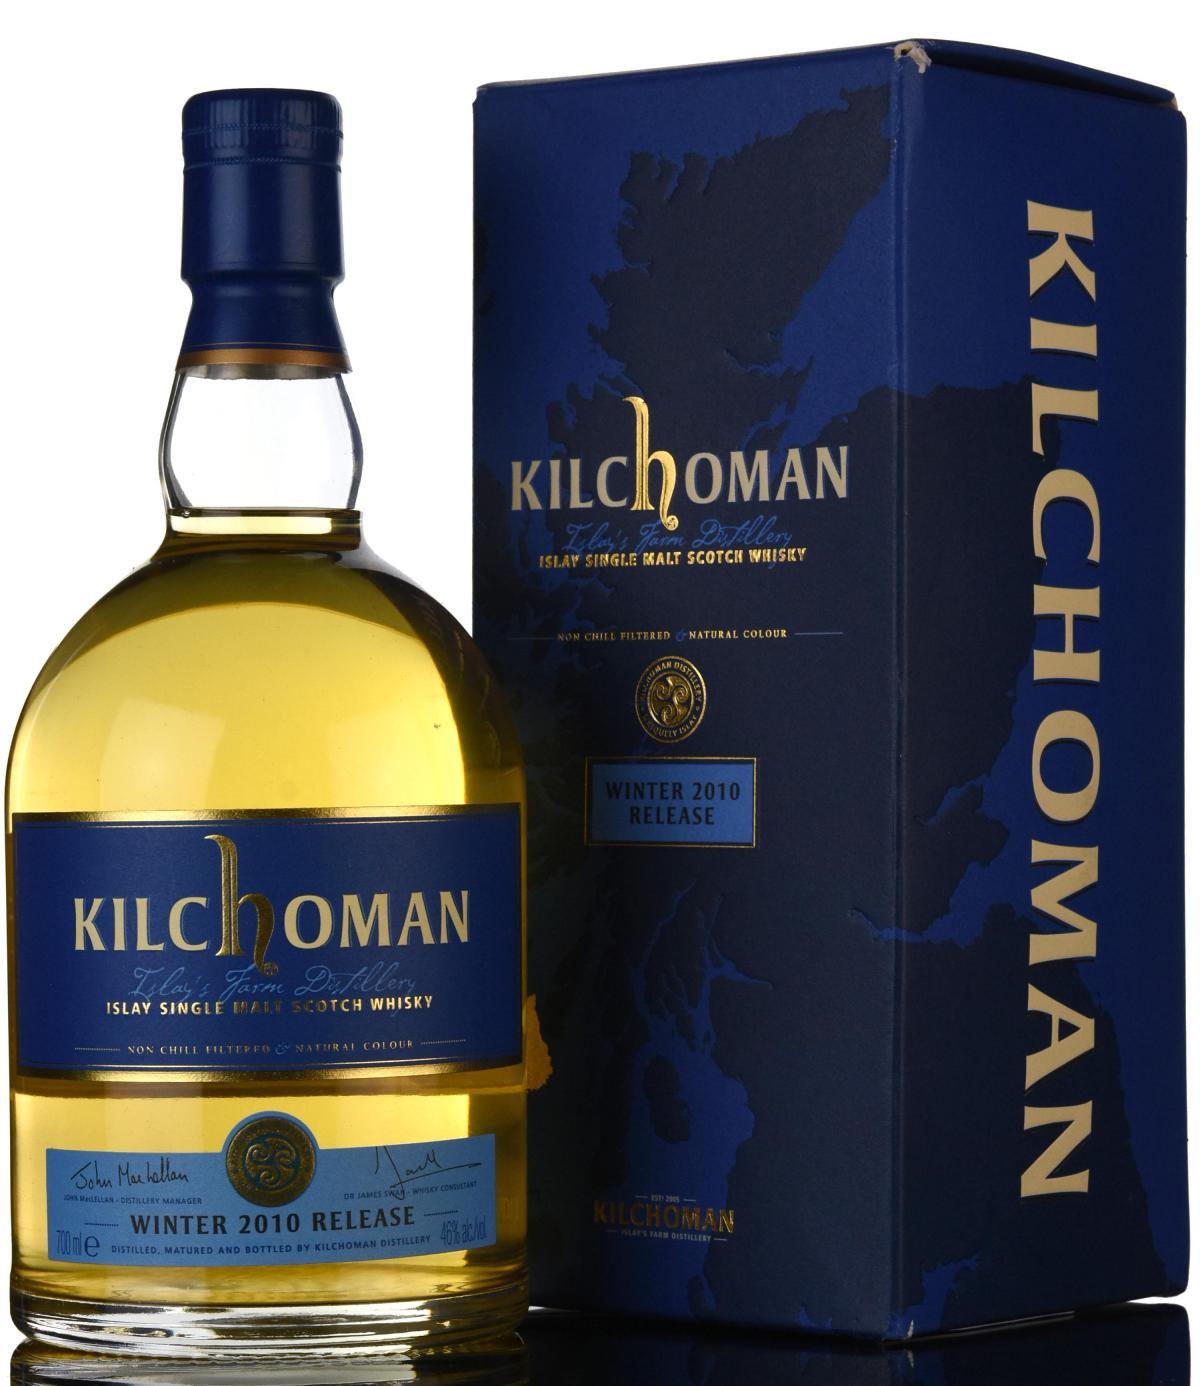 Kilchoman Winter 2010 Release